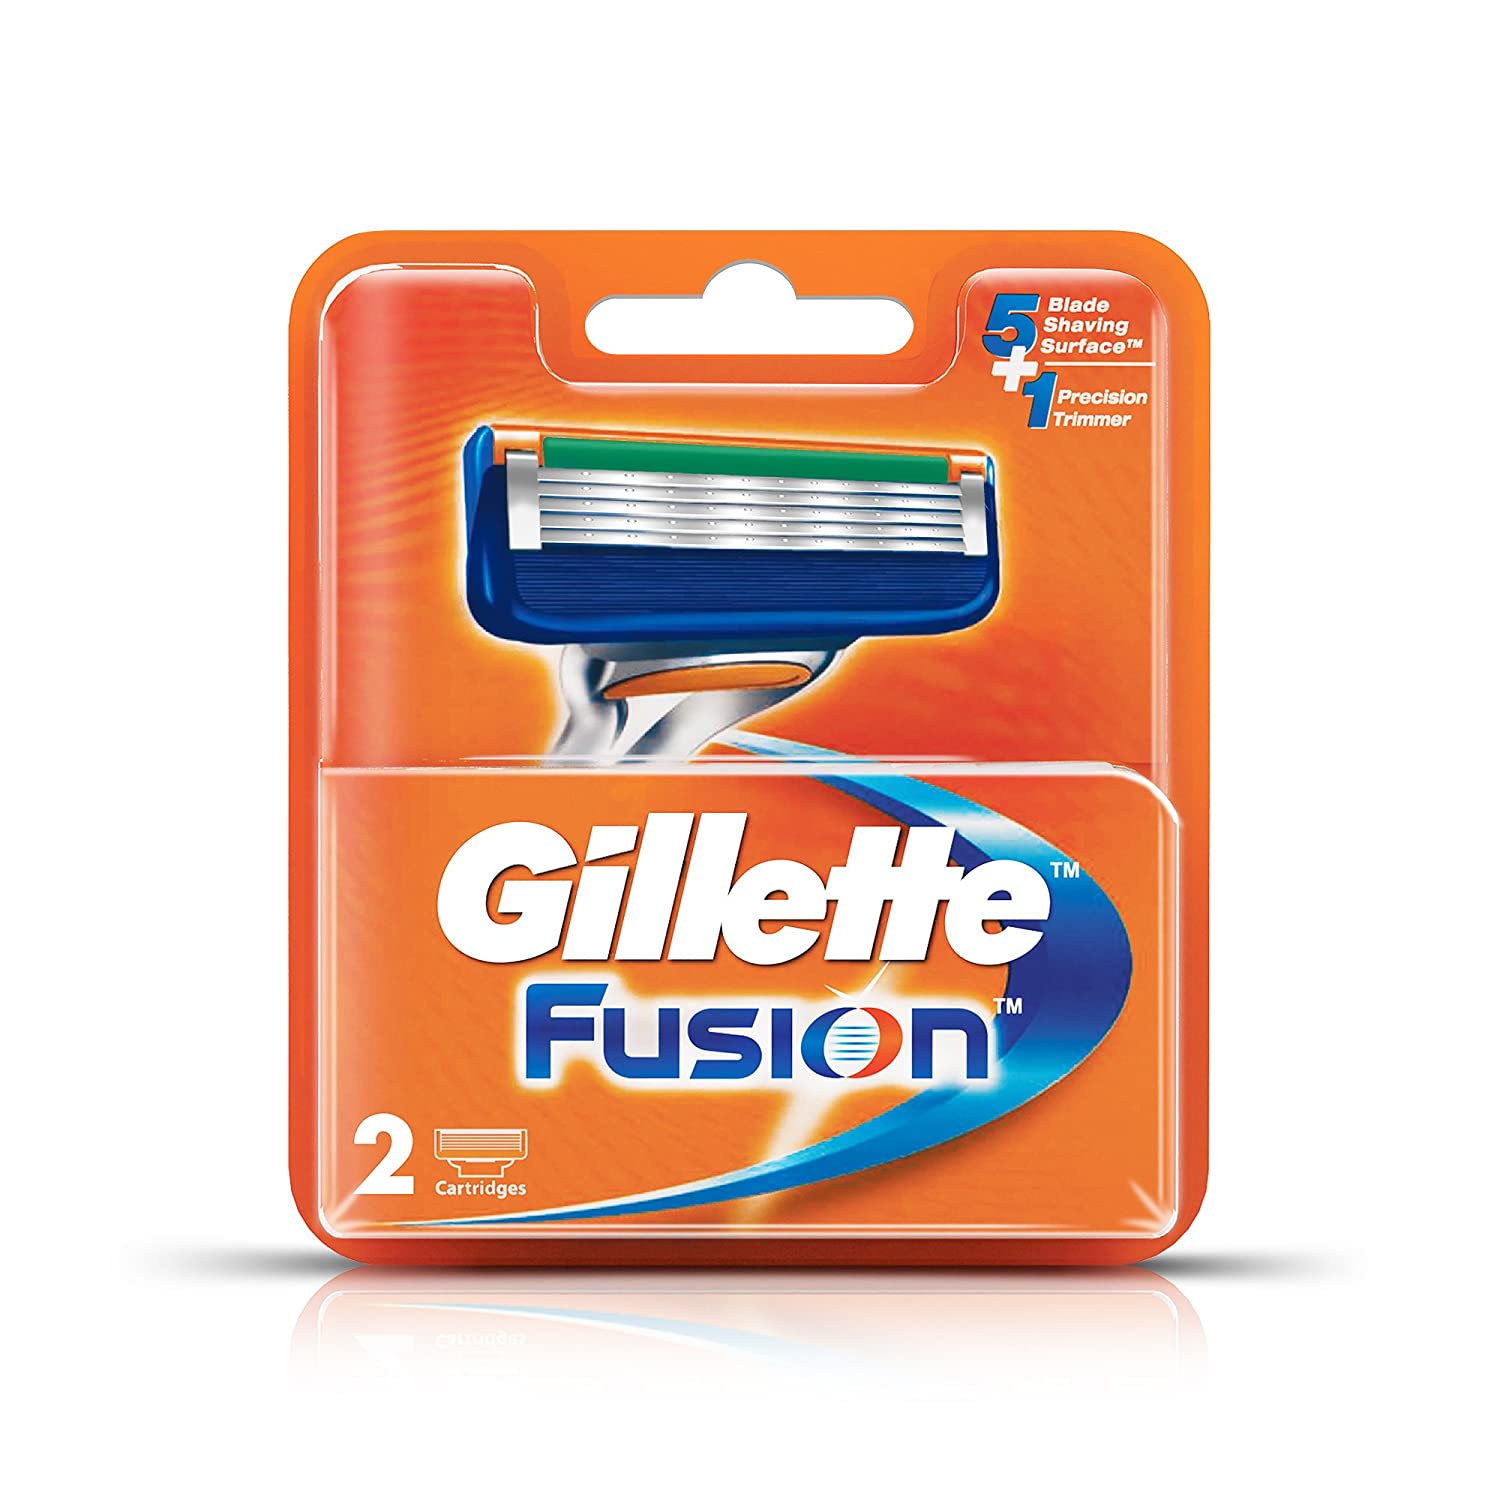 Buy Gillette Fusion Cartridge, 2 Count Online